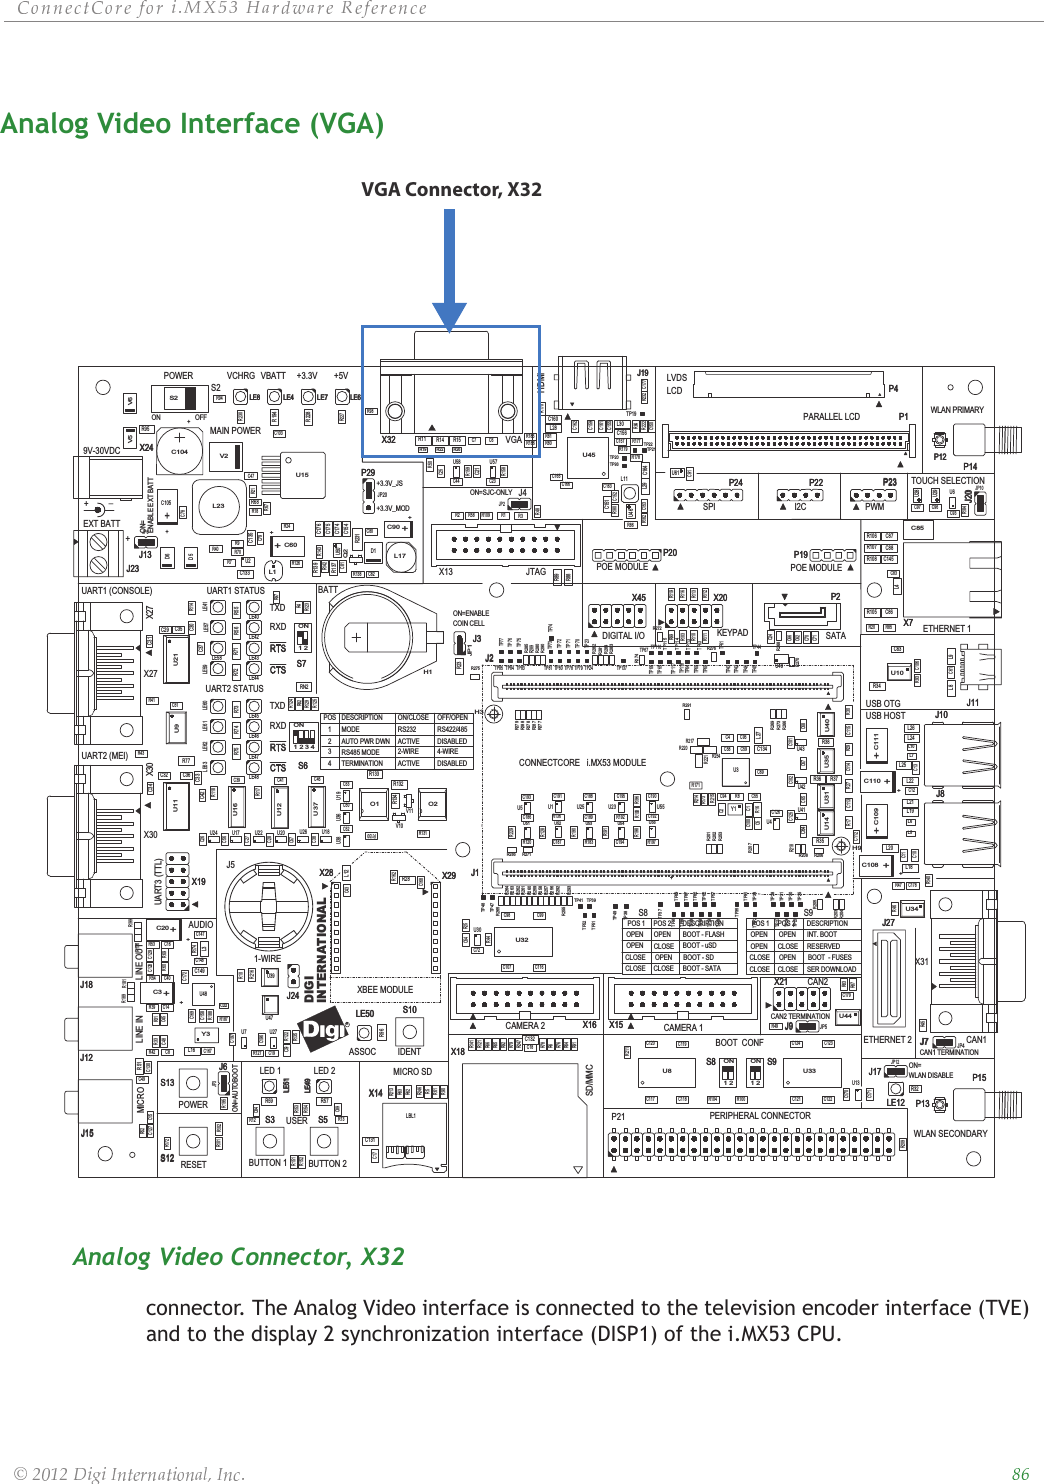 ȱ ȱ ȱ ȱ ȱ ȱȱ ȱ ȱ ȱ ȱȱȱAnalog Video Interface (VGA)Analog Video Connector, X32connector. The Analog Video interface is connected to the television encoder interface (TVE) and to the display 2 synchronization interface (DISP1) of the i.MX53 CPU. RU3U50ON41 32S6ON1 2S7ON1 2S8ON1 2S9S5S3S13S10H9H3D1U21U11Q2U8 U33U32X18P24 P22 P23P29X24J1J2P1P21X19X21X45 X20J24J13J17J6J20J7J9U13U52 U53U51 U54U7U55U56U29U28U61U19U24U38U43U42U41U4U20U22U17U36U18U26U6U2U15JP6JP20JP1JP3JP10JP4JP12JP5J19X32X29X28X7P20J11P19R139J27J10J8L8L26L27L21L19L22L20L25L24L18L28L29L9L12L16L3L4D5V5 V6D6P12P13S12V2X30X27X31X14X16 X15X13U46U10U35U31U14 U40LE59LE62LE63 LE61 LE41LE57LE60LE58LE7 LE6LE4LE8LE51LE49LE40LE43LE42LE44LE47LE48LE45LE46LE12LE50J23P14P15J15J12J18V10V11O1 O2R130R131R51R133R134R28R228R56R71R75R77R74 R55R73R59R72R57R194R96R70R18R132R14R106R108R107R105R15R11+C60+R52R84R41C2C1P2R45R49+C3+R187R189R138R159R188R5R6R7C88C87C145C86R16R42R31R39R33RN2C85R127R8R9R36 R37R34R38R35R95R89R88U37U12U16U45S2C25P4C104+C49C129R53C127C48 C45R182C7 C6L10L6L7L5R142R86+C109++C108++C110++C111+C105++C90+R20R181R176R12 R13R85R94R195R102R101C81C103C120C169C43C53C39C27C159C161C106C46C28C162C57C155R222C163C113 C114 C115C126C101C125 C102C69C100C95C94C59C51C56C41C26C18C50C38C83C55C58C44C89C171C78C166C165C177C84C170C52C196C118C17C123C187C98C167C117C119C79C121C188C191C179R50C99C194C97C122C189C195C158C193C186C124C96C197C80C91C93C178R199C148C147C116C107C190C192C168C112R30R17R93R27 R29R135R122R10U9+C20+R246R247C150Y1C153C22L23R143Y3C151C164R23C132C134C160C131C176C175C154C174C135C133C149C70C13C12C47C61C11C71C10C62C66R118R172R4R123R61R62R63R90C23R48R117R64R76R78R141R66R79R121R65R92R91R217R21R221R100R211R110R103R99R113R2R111R126R119R25R184R104R112R1R116R220R254R154R153C157C54R137L17J5U48U47U39U34U44U25U1 U23U27U5R231R204R205R218R208R289R275R274R278R287R273R261R269R206R253R202R281R203R285R290R277R284R266R257R280R282R258R259R260R276R268R22 R26R19R286R283R201R262R263C128R256R265R264R207R271R158R288R272R279R291R177R213R175R179R43R178R140R209R180R232R44R47R98R58R83R24R46R270R40R174R87R109R114R3R97R129R82R124R125R152R68R151R191R227R32R193R190R196R136R230R183R192R128R120R198R229R197R162C82C37C35C15C65 C67 C68C36C4C5C42C29C32C34C33C64C31C156C9C63C19C30C8C14C172R81R80R186R185R67R216C152C130L11L1U57LBL1J4R173R214C24JP2R292C16R69R60L30R215R171U49C21U30J3C72H1R255R293U58R54 C40TP83TP85TP61TP90TP114TP67TP66TP115TP69TP116TP71TP117TP74TP78TP80TP63TP118TP64TP22TP21TP20TP19TP46TP72TP45TP60TP43TP84TP42TP79TP65TP73TP113TP137TP70TP23TP24TP81TP47TP48TP77TP76TP75TP93TP38TP49TP52TP51TP39TP41TP25TP82TP89TP87TP62TP29TP30TP31TP28TP91TP33TP35TP57TP26TP37TP88TP86TP68TP58TP36TP92TP27TP44X14J17 P15S8CAN2SATAPWMON=WLAN DISABLEJ19J12POWERX27ON=P29S9S9S5_I2CX21CLOSERXDJ1+3.3V_JSSER DOWNLOADJ18+3.3V_MODDIGIJTAGS8IDENTDISABLEDUSERP22+LINE OUTUART3 (TTL)AUTO PWR DWNJ13+VCHRGON/CLOSEP4RESERVEDCAN1 TERMINATIONTXDCLOSEUART1 STATUSX30OPENP12UART2 (MEI)LE51ETHERNET 1SD/MMCOPENX209V-30VDCSPI3LE49X15RS485 MODE+5VDESCRIPTIONVBATTJ81DISABLEDJ10MAIN POWEROPENP24J11LE8BOOT - SATAACTIVEPOS 1OPEN4BUTTON 12-WIRES6LVDSLCDOFF/OPEN4-WIREACTIVEX32POSINT. BOOTVGADESCRIPTION2MICRO SDX28WLAN PRIMARYJ27ON=ENABLECOIN CELLX45MICRO1-WIREJ15INTERNATIONALETHERNET 2LE50CAN1WLAN SECONDARYPOS 2J9P1OPENX29J24LED 2LE4X18S13PARALLEL LCDS3S12XBEE MODULEOFFP2J2ON=AUTOBOOTJ20i.MX53 MODULEPOS 1J7CLOSE OPENRXDCLOSEUART2 STATUSBOOT  - FUSESX16RESETTERMINATIONP14LINE INHDMIX19CLOSEASSOCCLOSE CLOSEBOOT - FLASHPOS 2LED 1CAN2 TERMINATIONS7OPENX7BOOT - uSDBOOT - SDJ6BUTTON 2J23P23S2LE6LE7S10KEYPADMODECAMERA 2RS232CONNECTCORERS422/485EXT BATTENABLE EXT BATTX24TOUCH SELECTIONDESCRIPTIONONUART1 (CONSOLE)+3.3VPOWERLE12CLOSEDIGITAL I/OTXDPERIPHERAL CONNECTORCAMERA 1BOOT  CONFUSB OTGUSB HOSTON=SJC-ONLYAUDIOJ3POE MODULEP19POE MODULEBATTOPENP20P13VGA Connector, X32